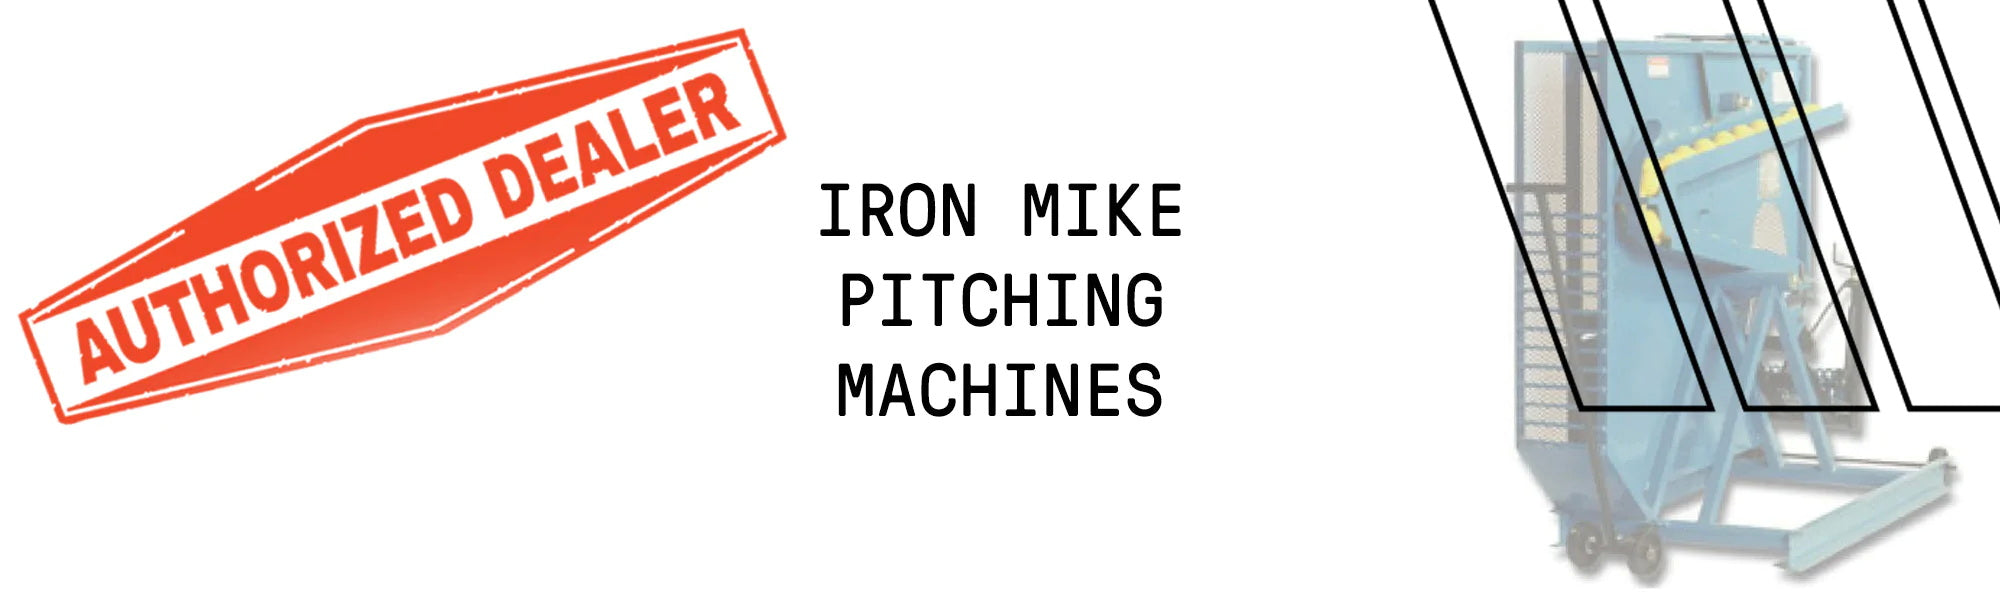 Iron Mike Pitching Machines